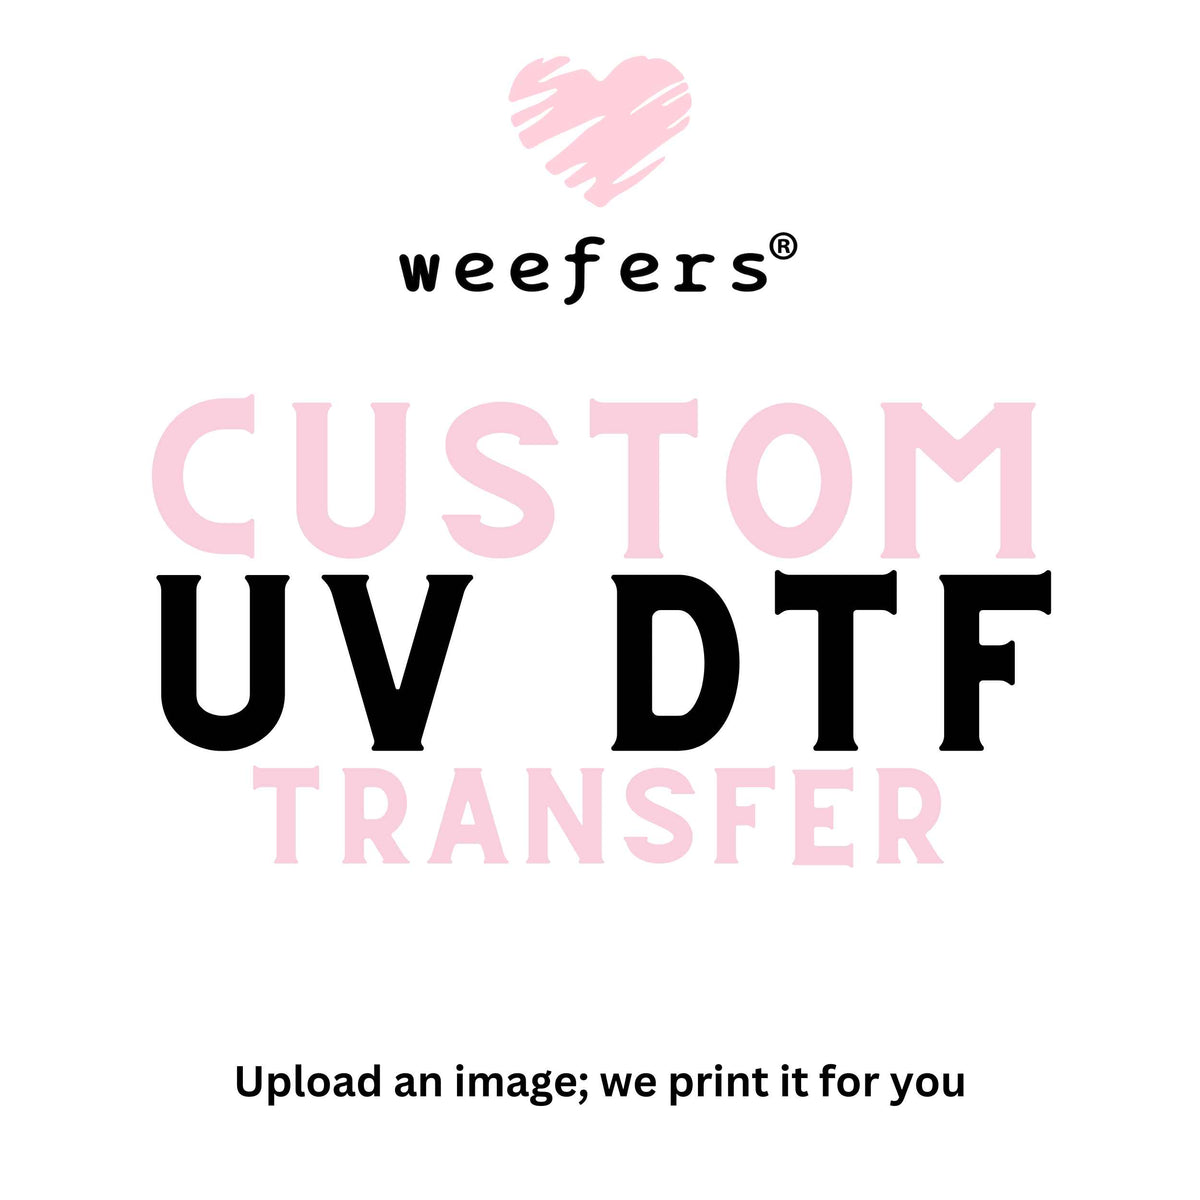 WE PRINT, YOU APPLY Custom Printed UVDTF Stickers - 2.5 x 2.5 inch